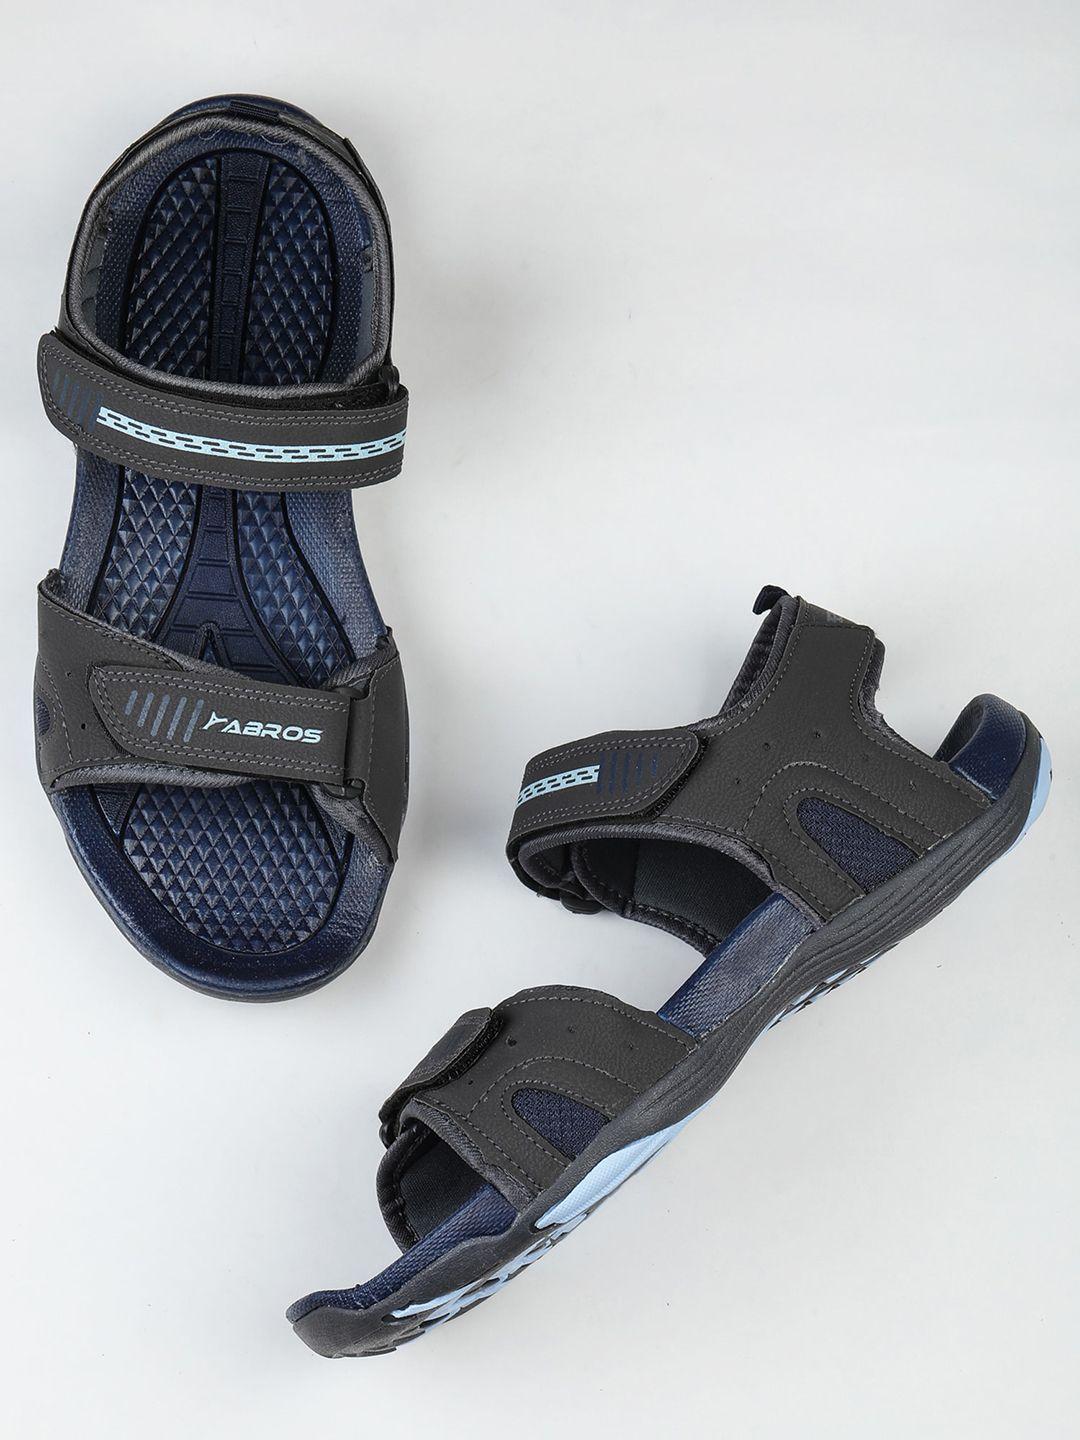 abros men grey & navy blue patterned sports sandals